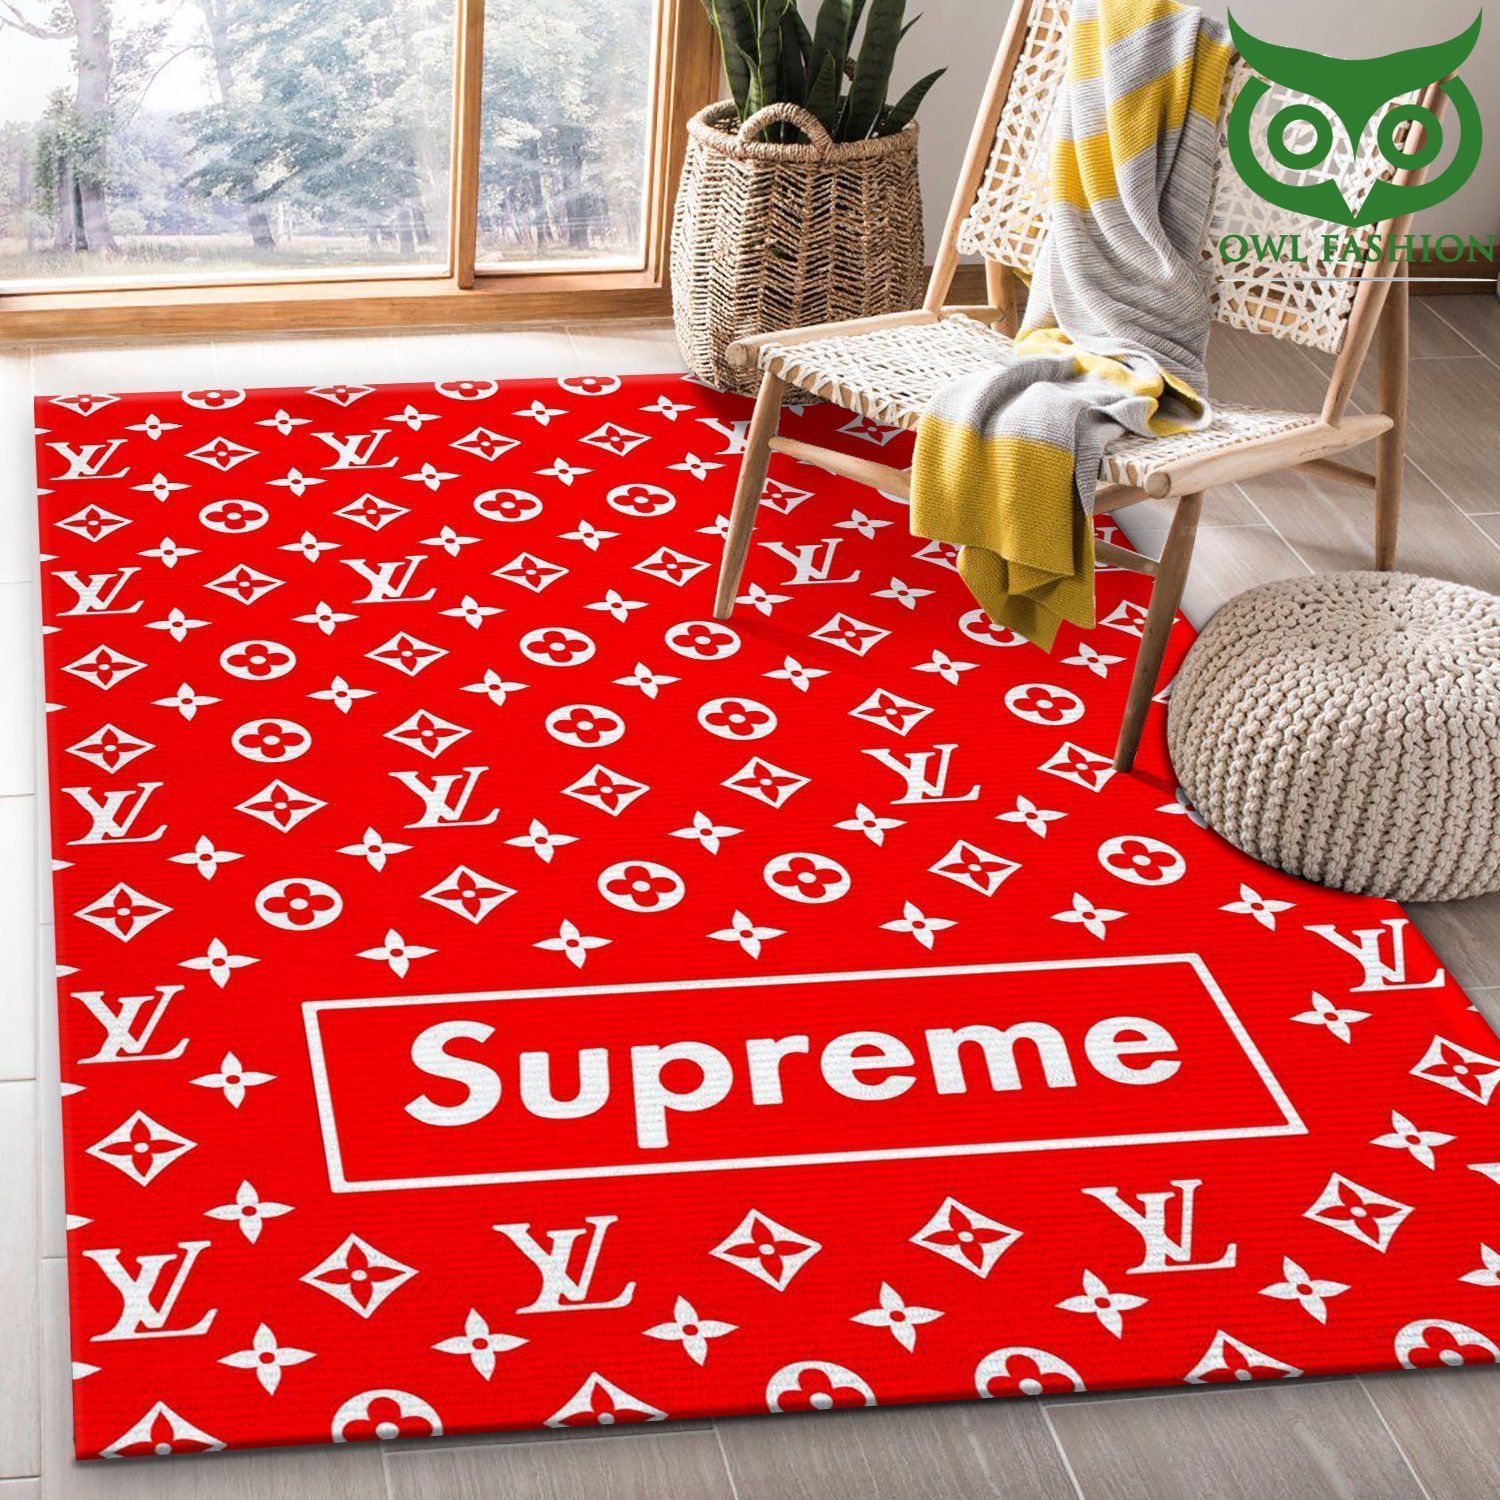 Supreme Lv Red Carpet Rug 